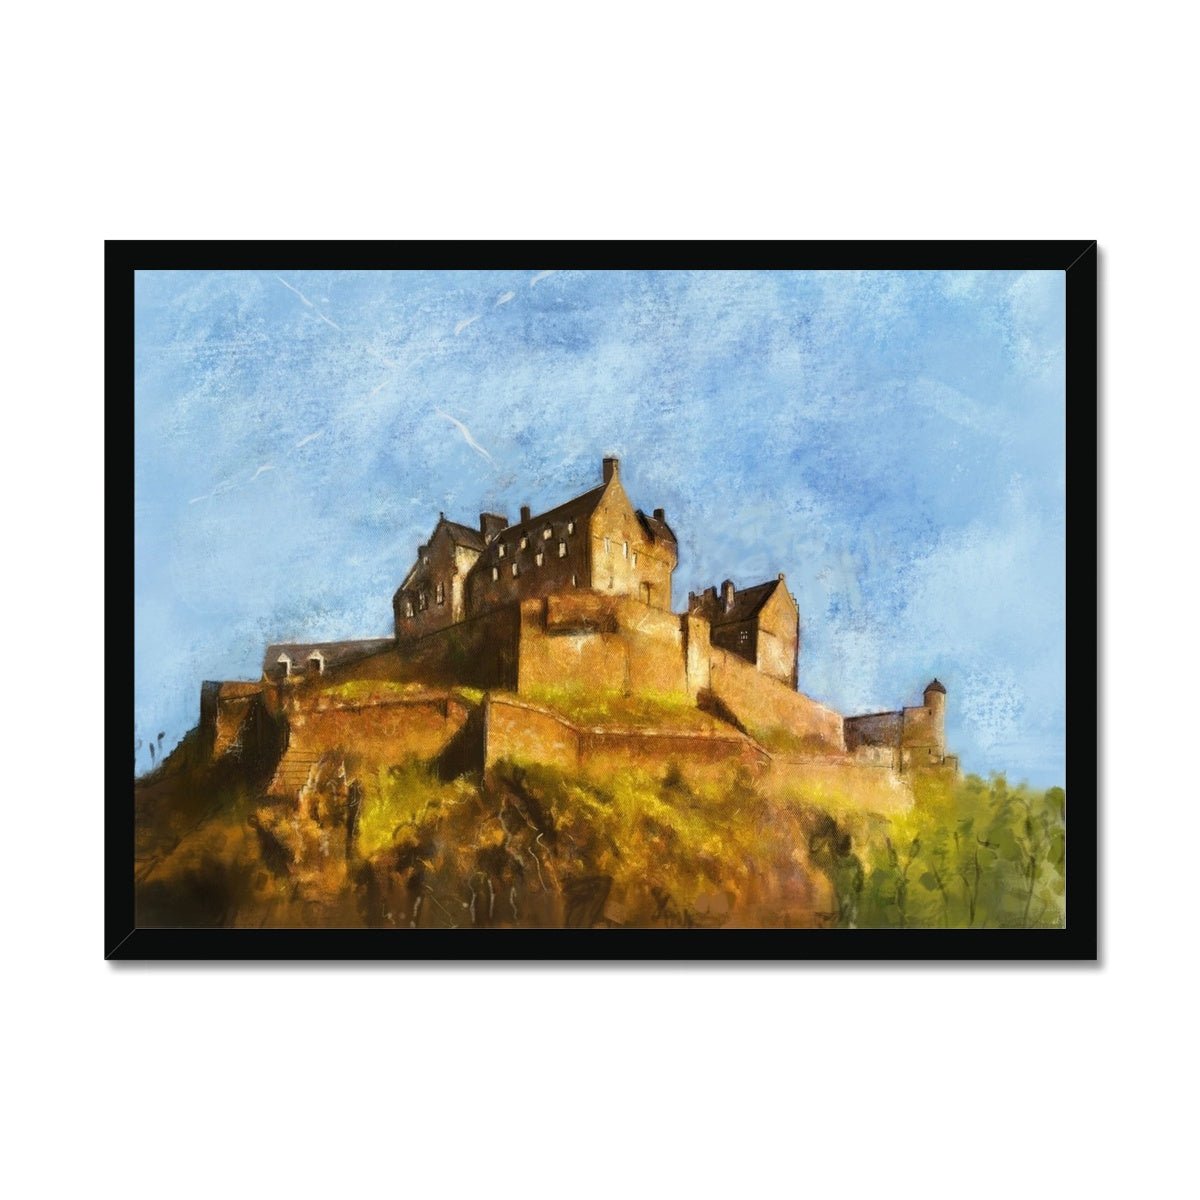 Edinburgh Castle Painting | Framed Prints From Scotland-Framed Prints-Historic & Iconic Scotland Art Gallery-A2 Landscape-Black Frame-Paintings, Prints, Homeware, Art Gifts From Scotland By Scottish Artist Kevin Hunter